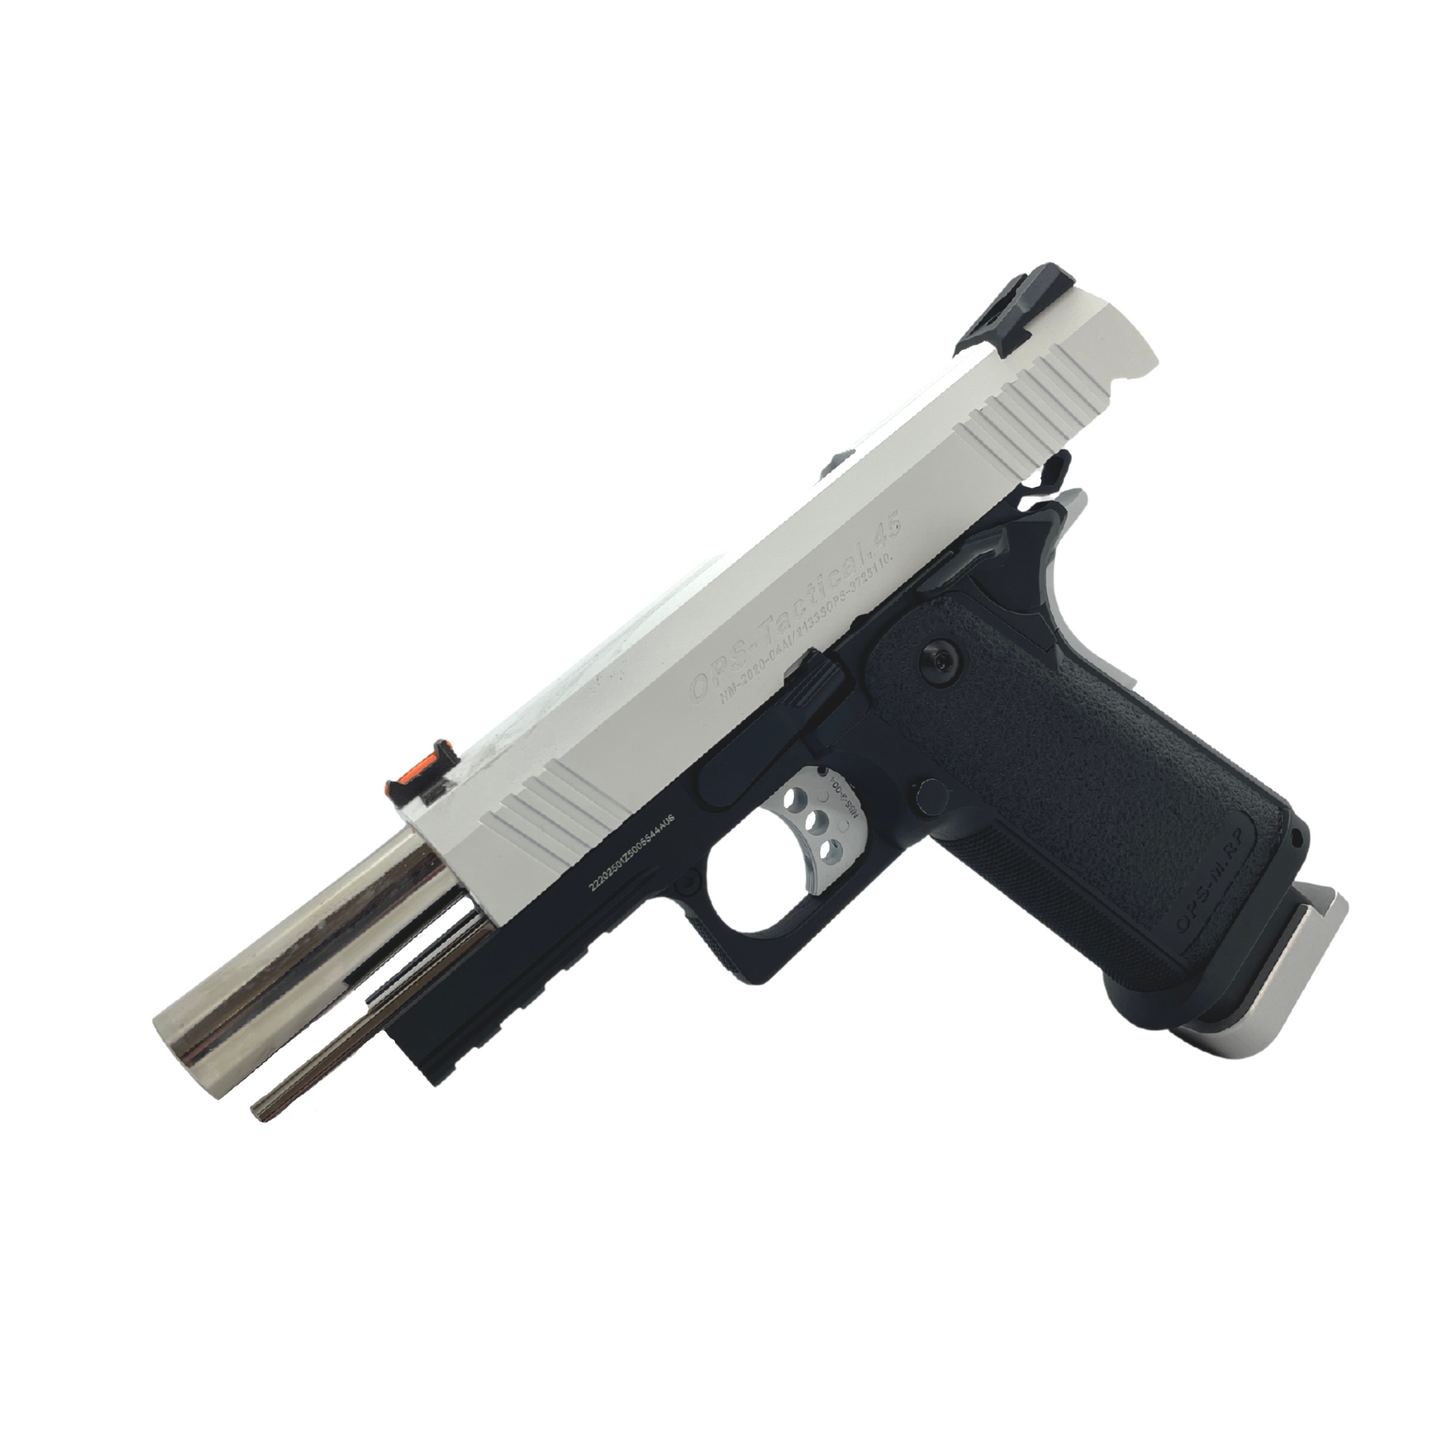 Custom "Bianco" G/E Hi-Capa 4.3 OPS Tactical Gas Pistol - Gel Blaster